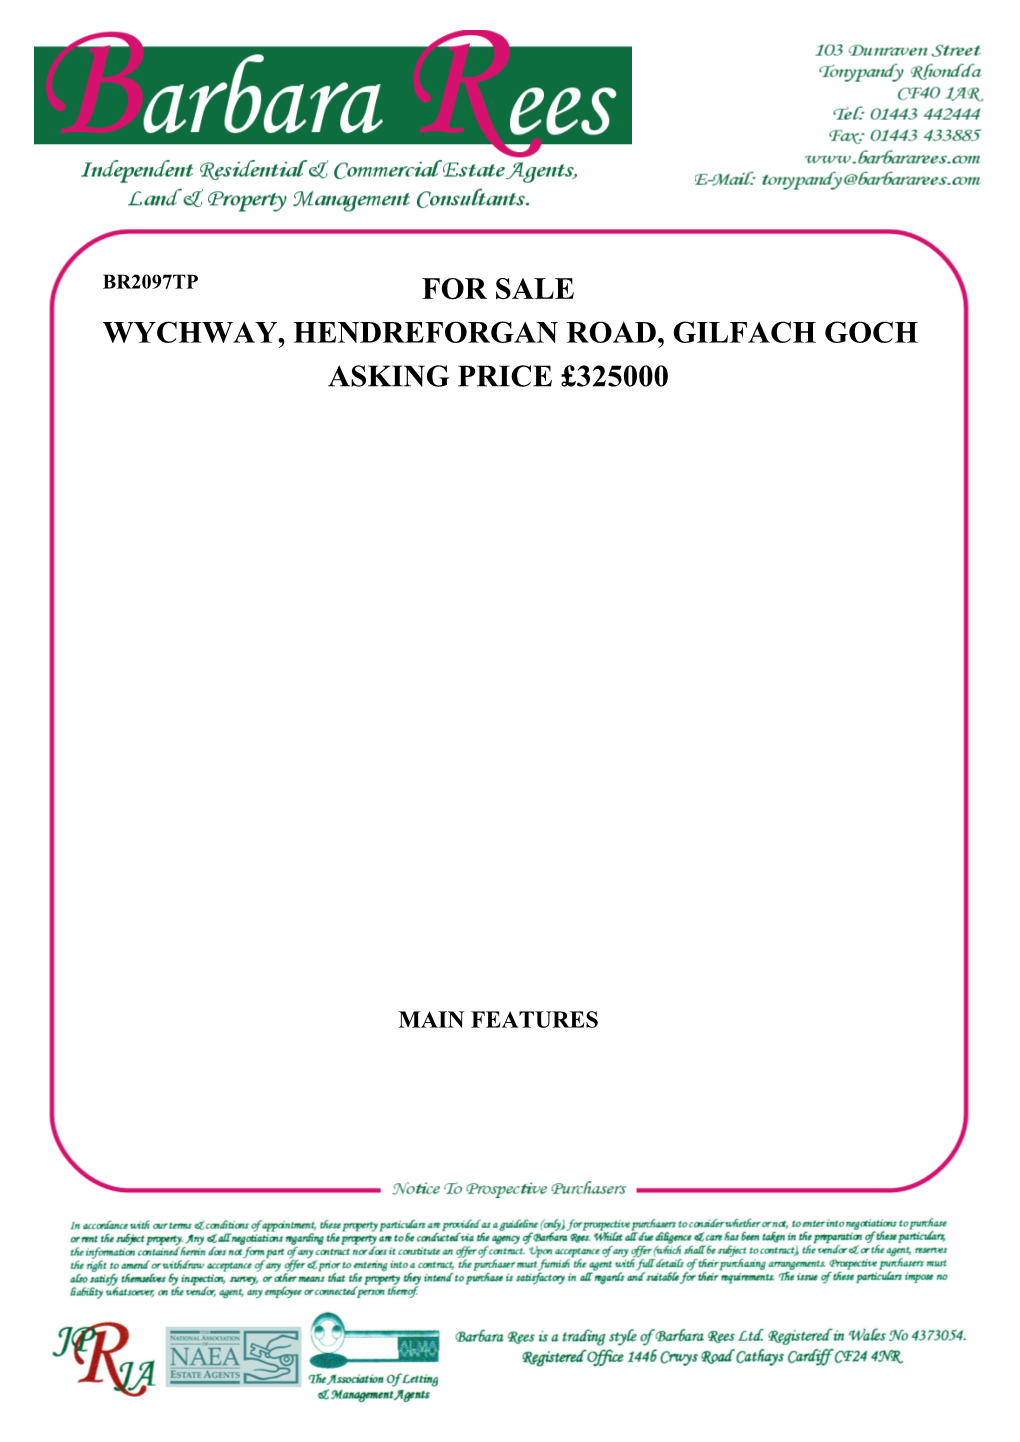 Wychway, Hendreforgan Road, Gilfach Goch Asking Price £325000